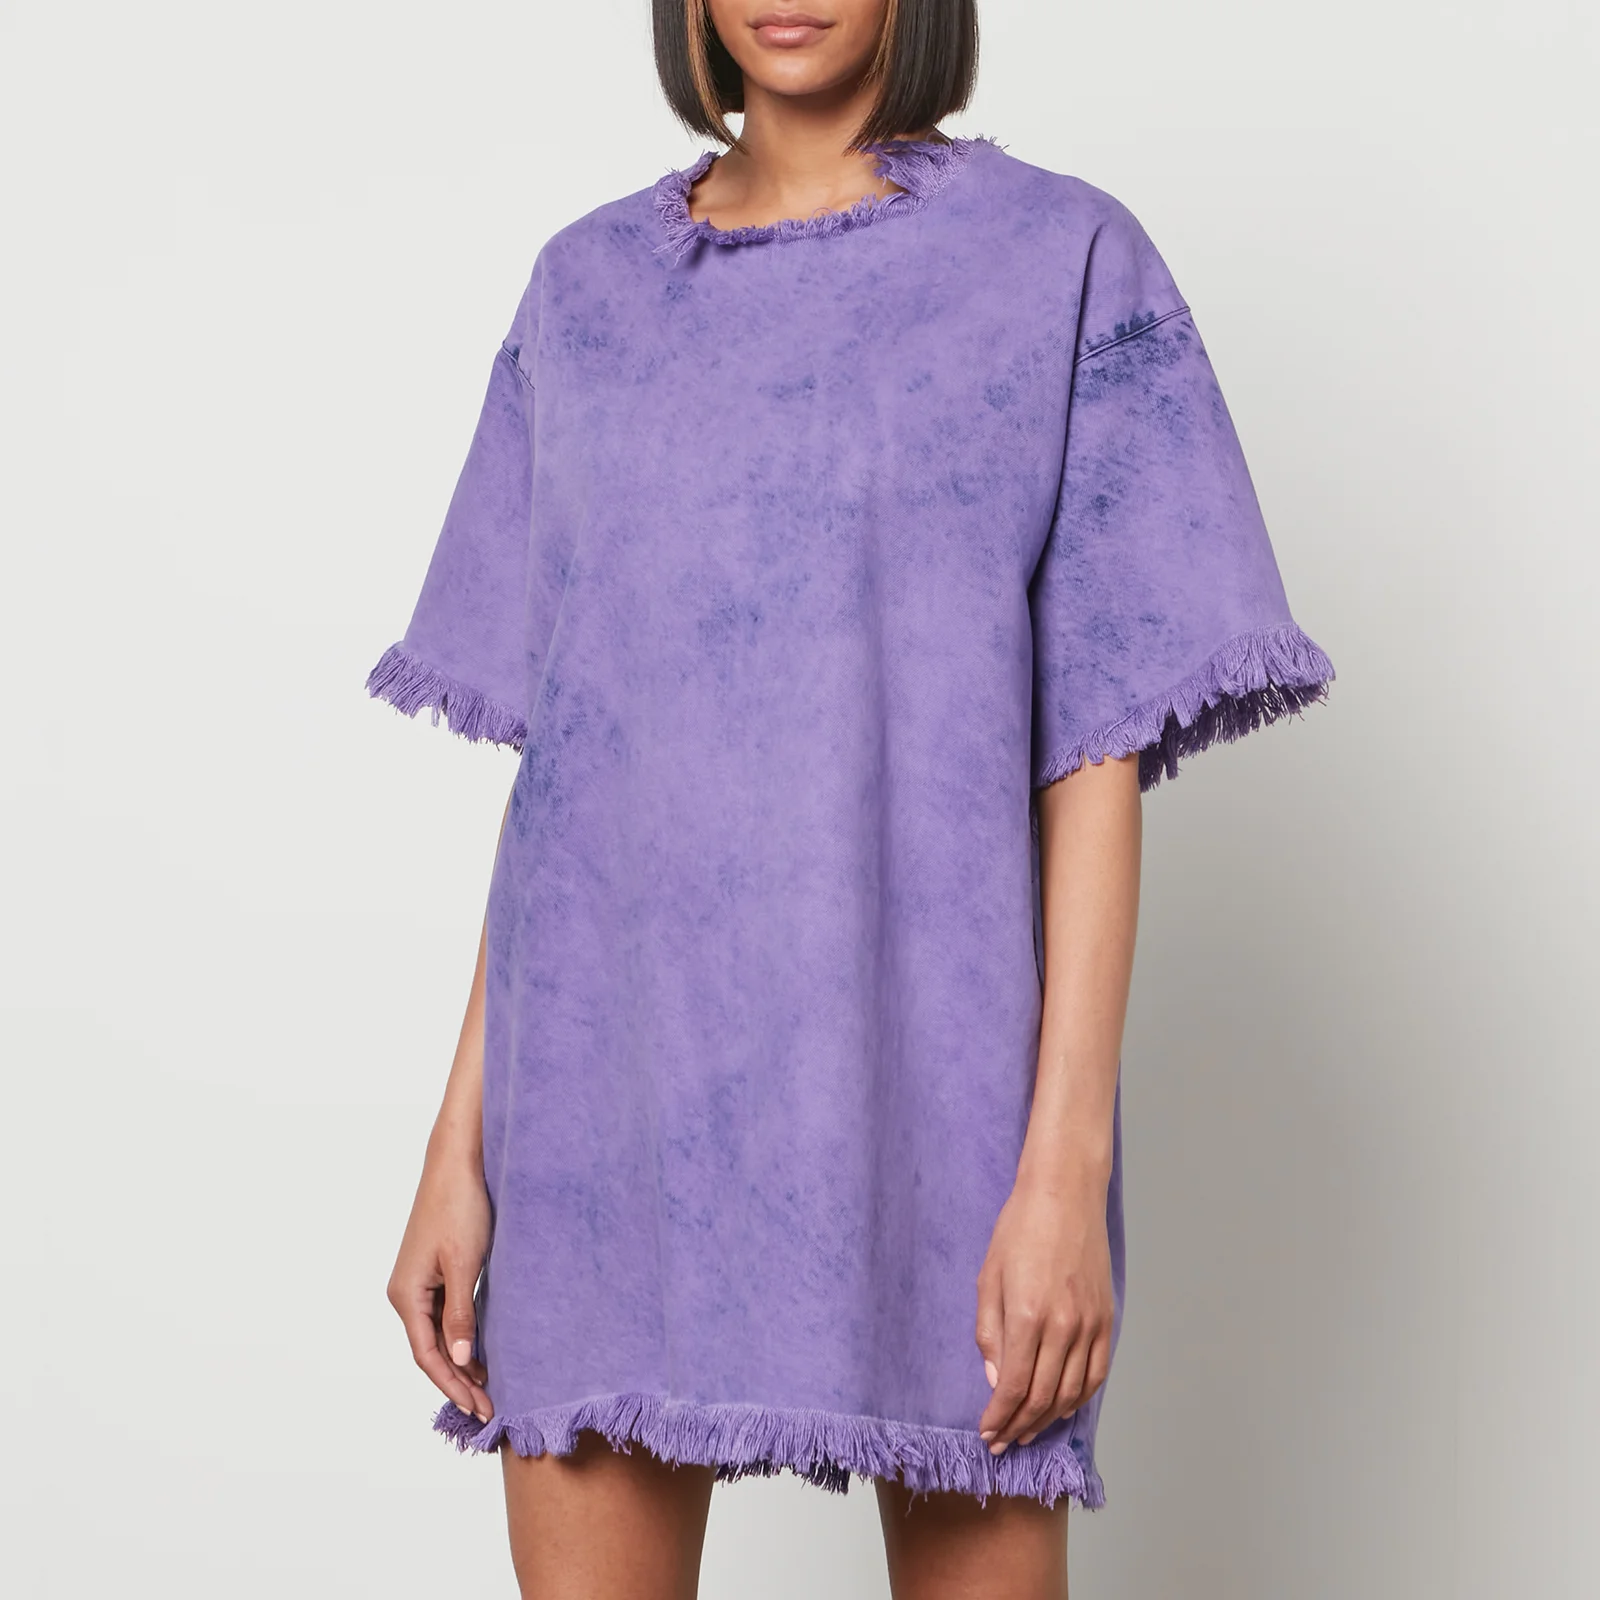 Marques Almeida Women's Oversized T-Shirt Dress - Lilac Image 1